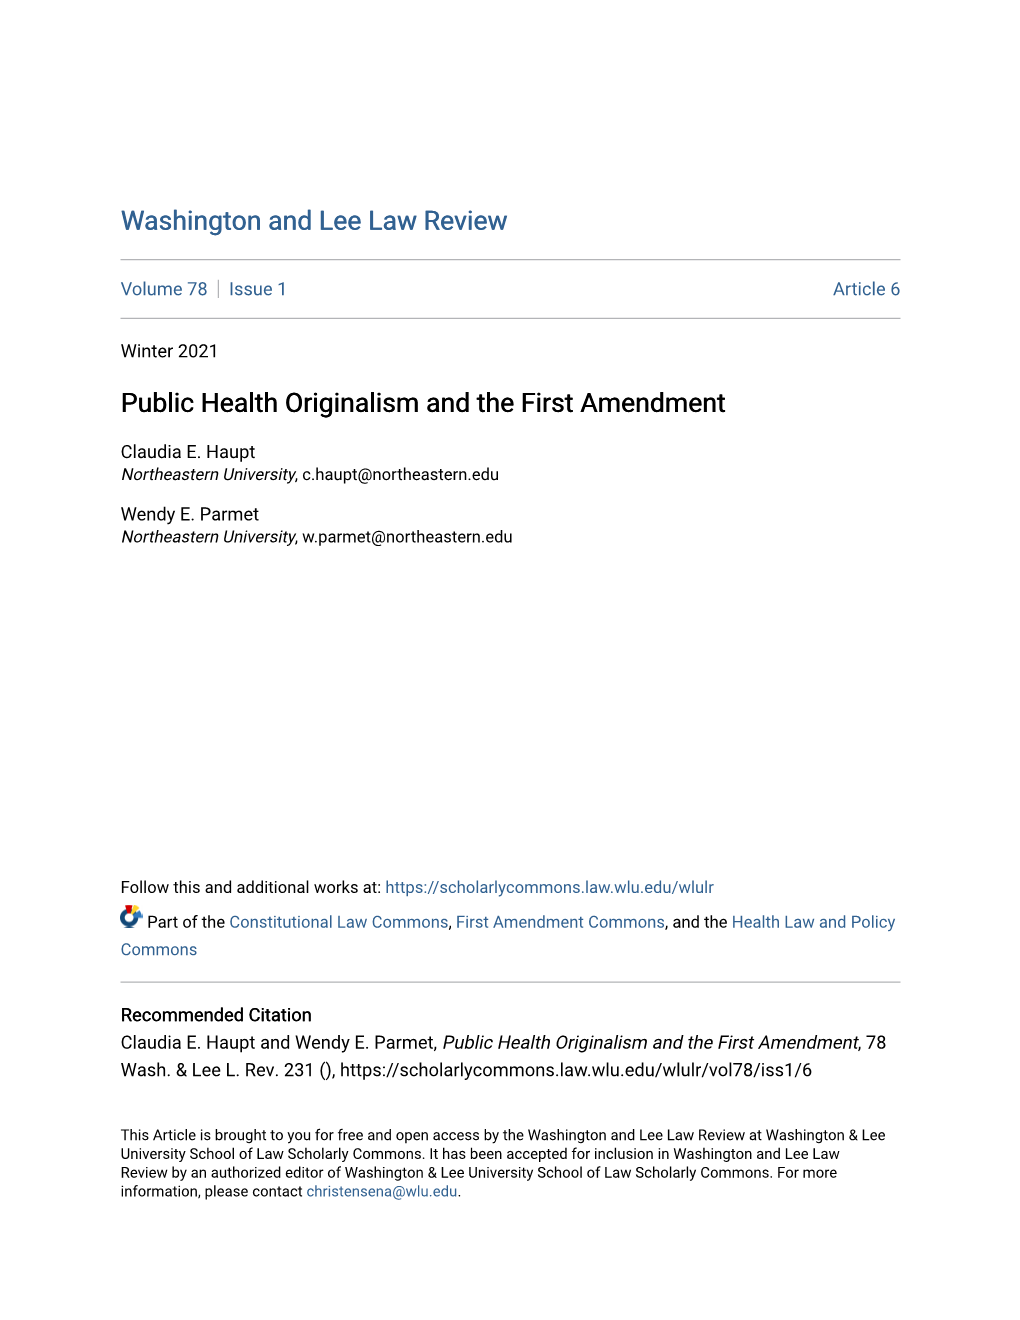 Public Health Originalism and the First Amendment